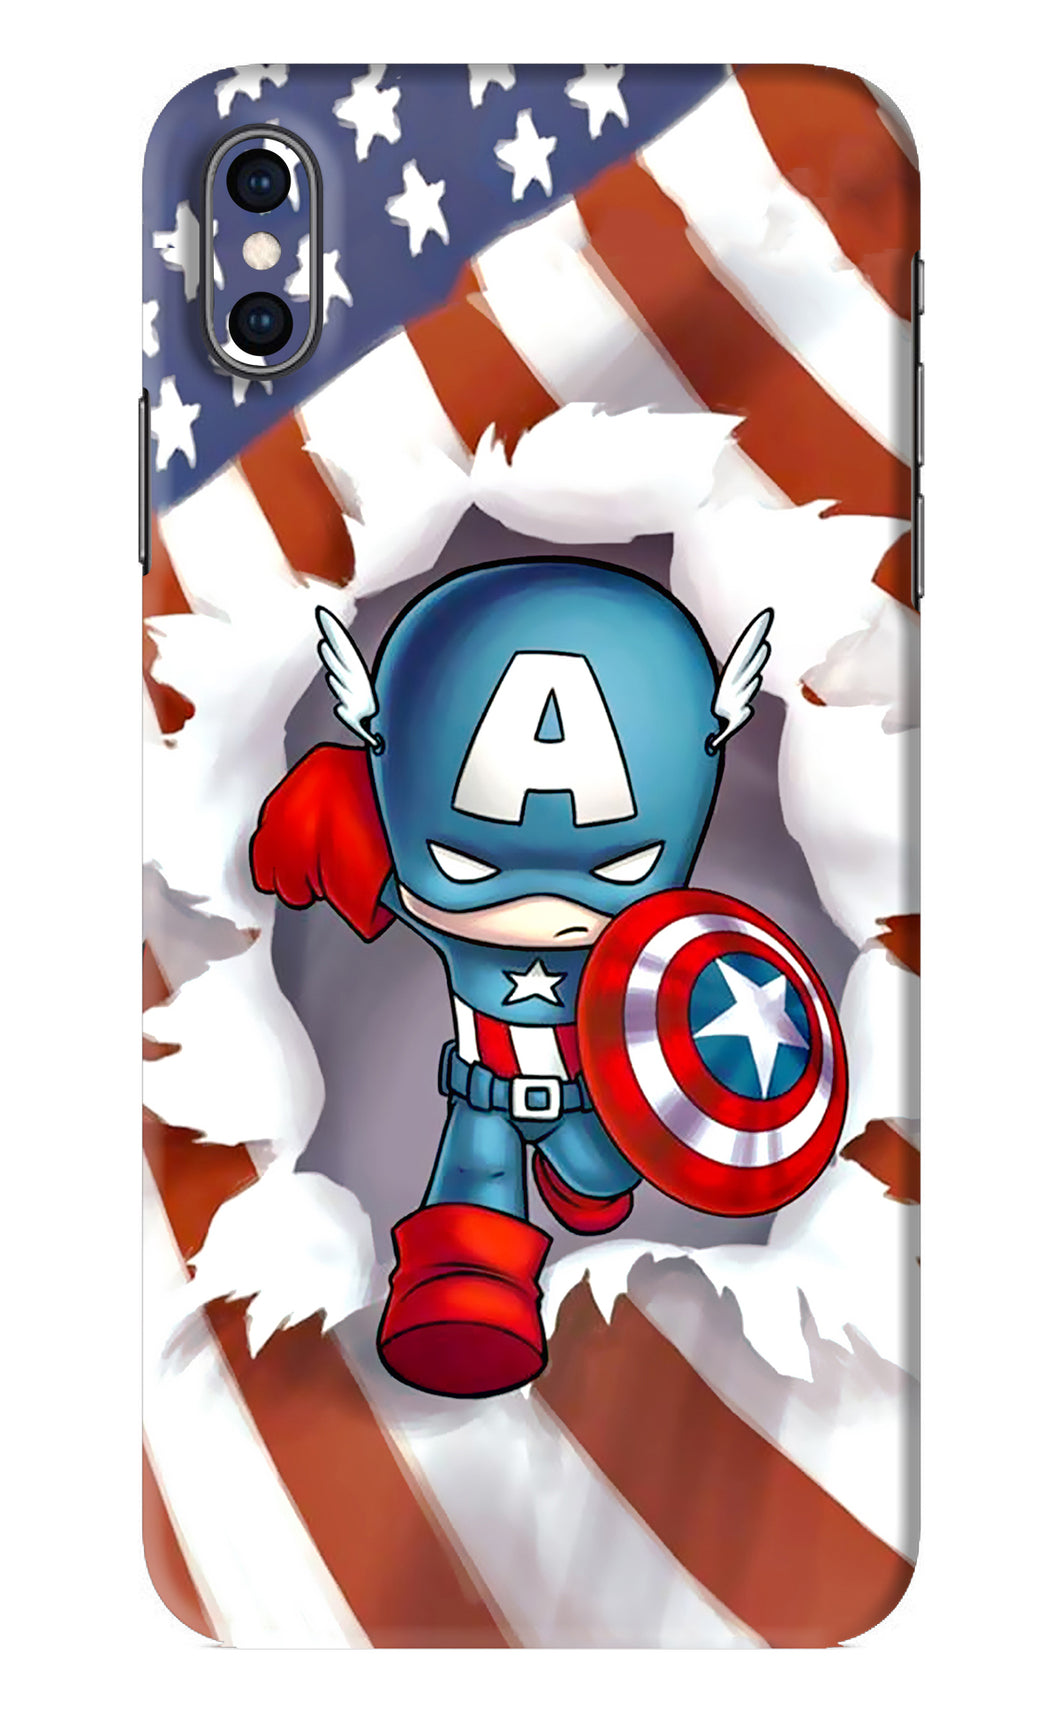 Captain America iPhone XS Max Back Skin Wrap